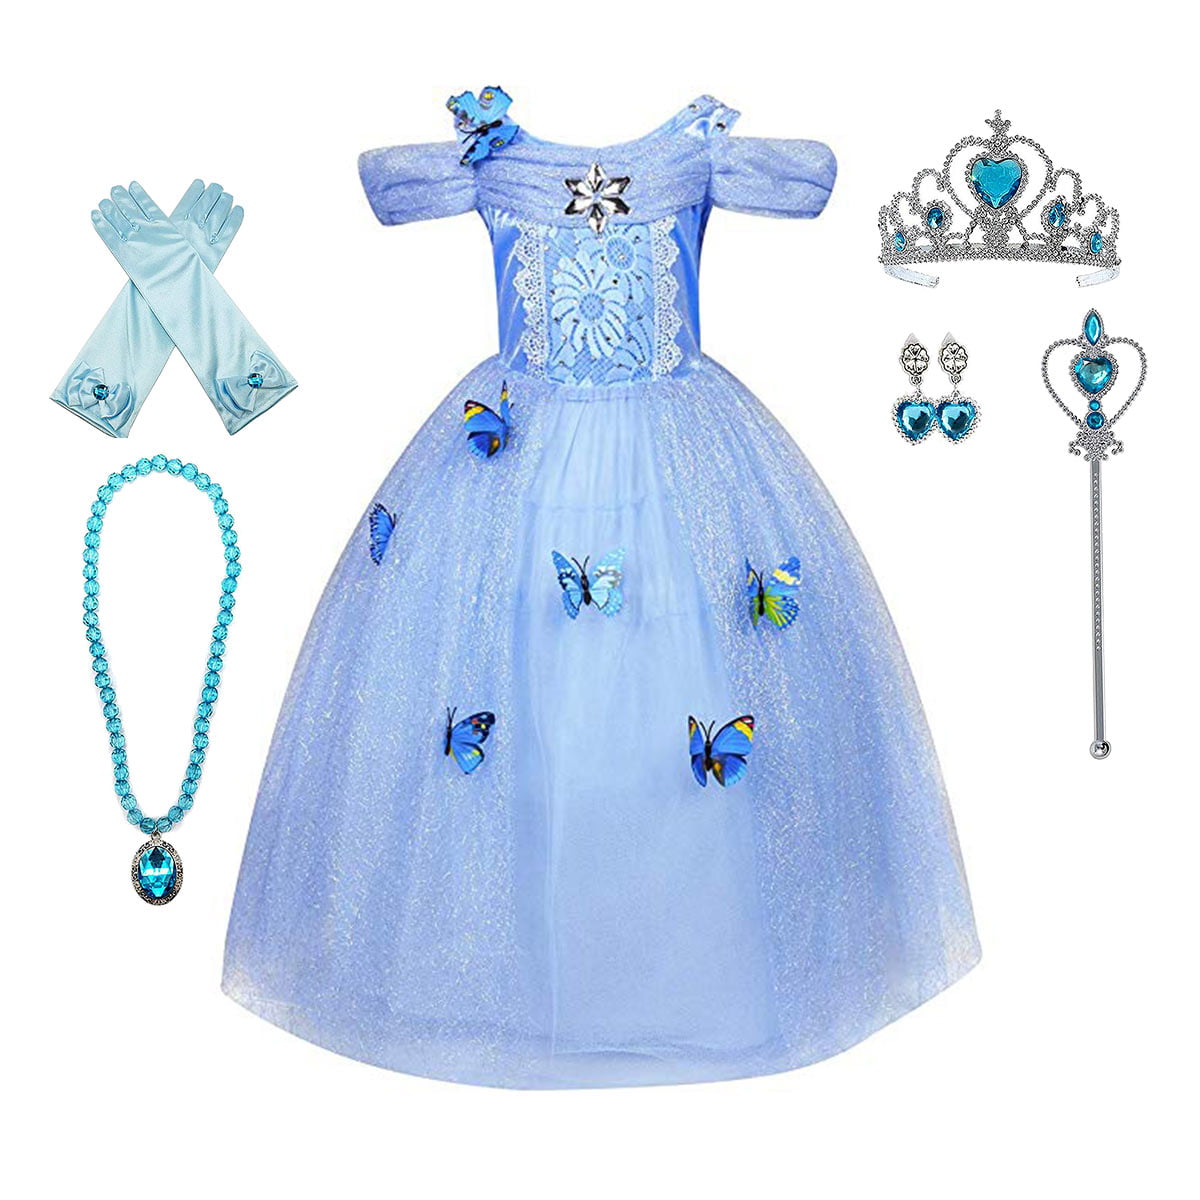 Children's Blue Ballgown Fancy Dress Costume Witch Halloween Dress Up Aged 5-6 